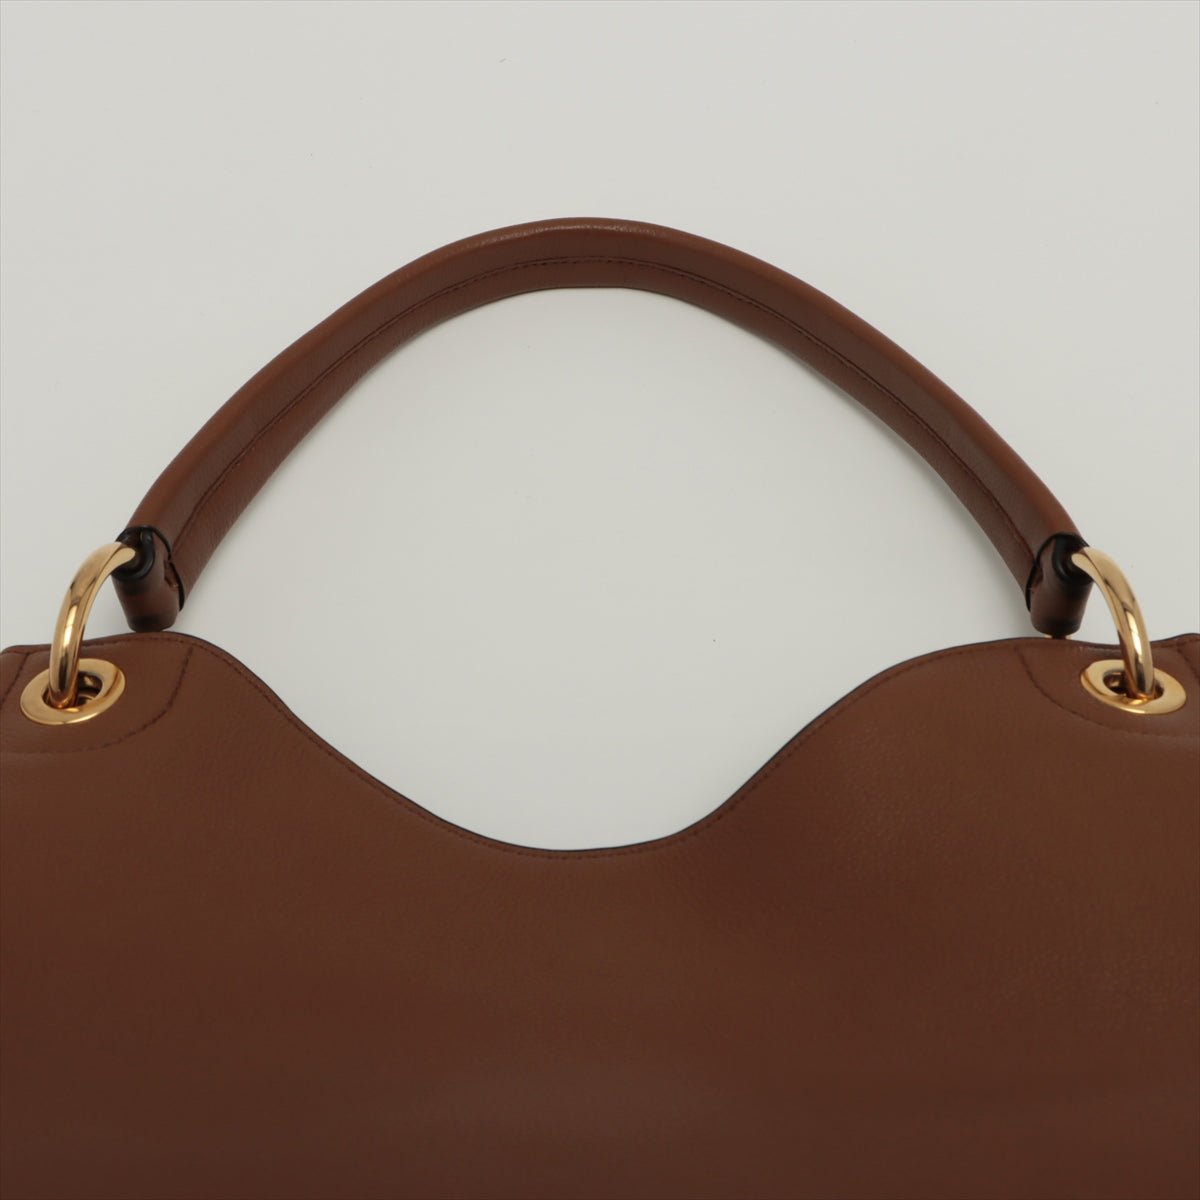 Prada Vitello Phenix Brown Leather Shoulder Bag ()